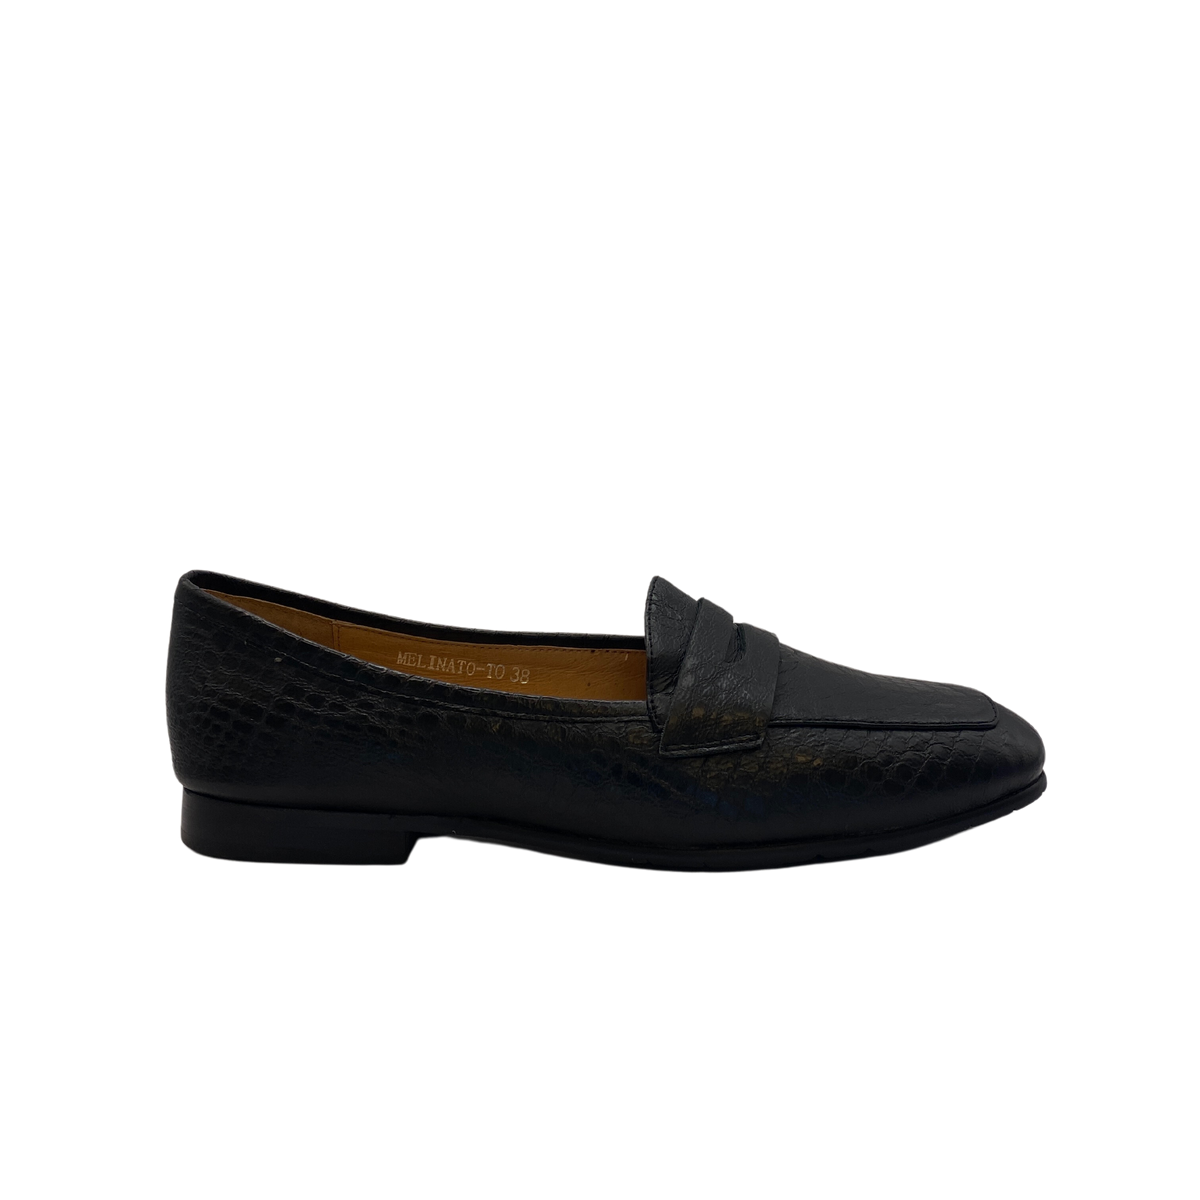 Melinato - Black Croc Leather (37,41,42) – Buckle & Bow